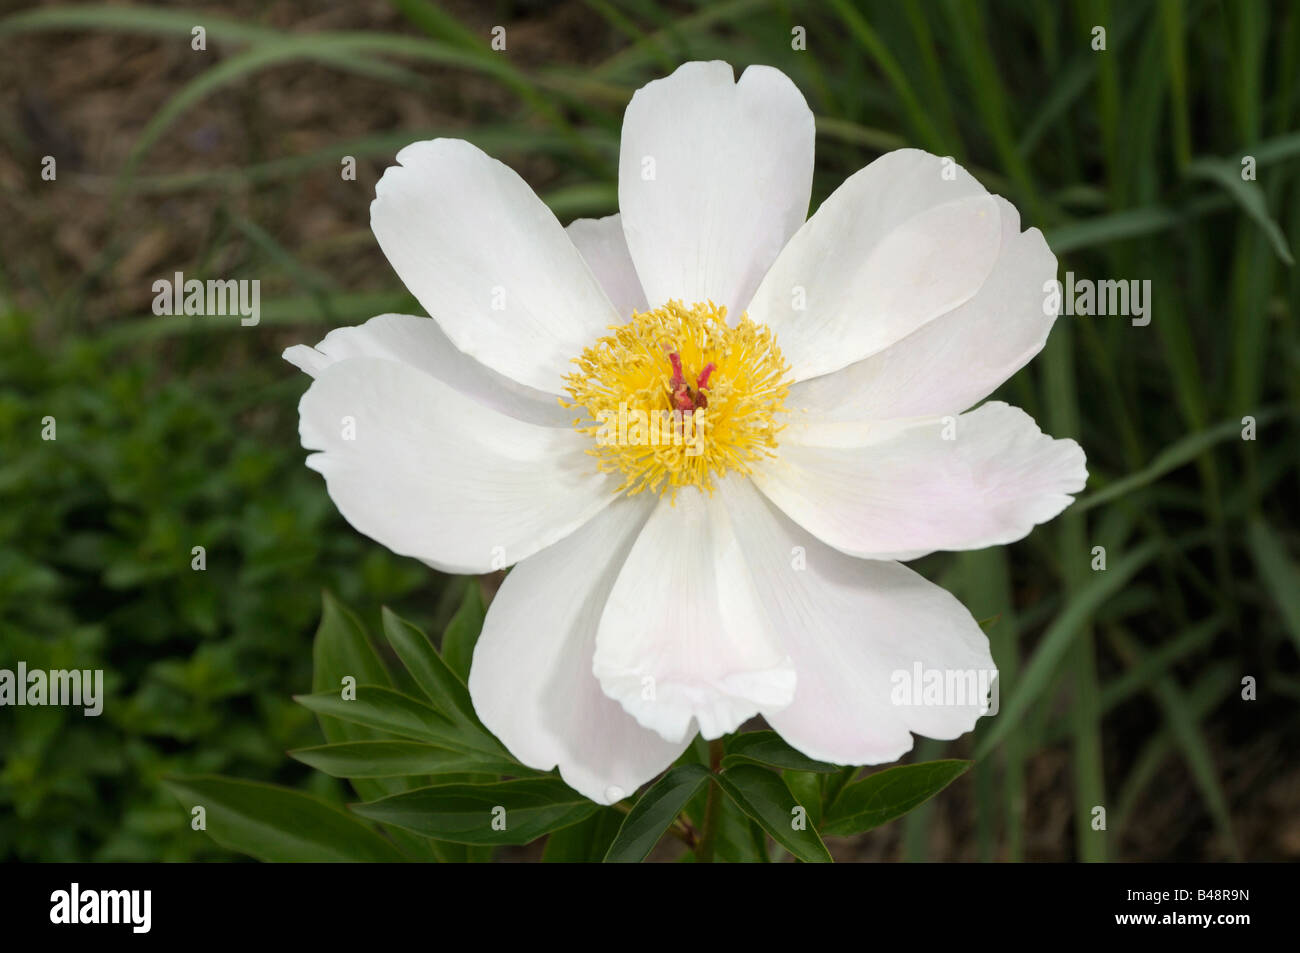 Weiße Paeony, gemeinsamen Garten Paeony, chinesische Paeony (Paeonia Lactiflora), Sorte: Nymphe, Blume Stockfoto